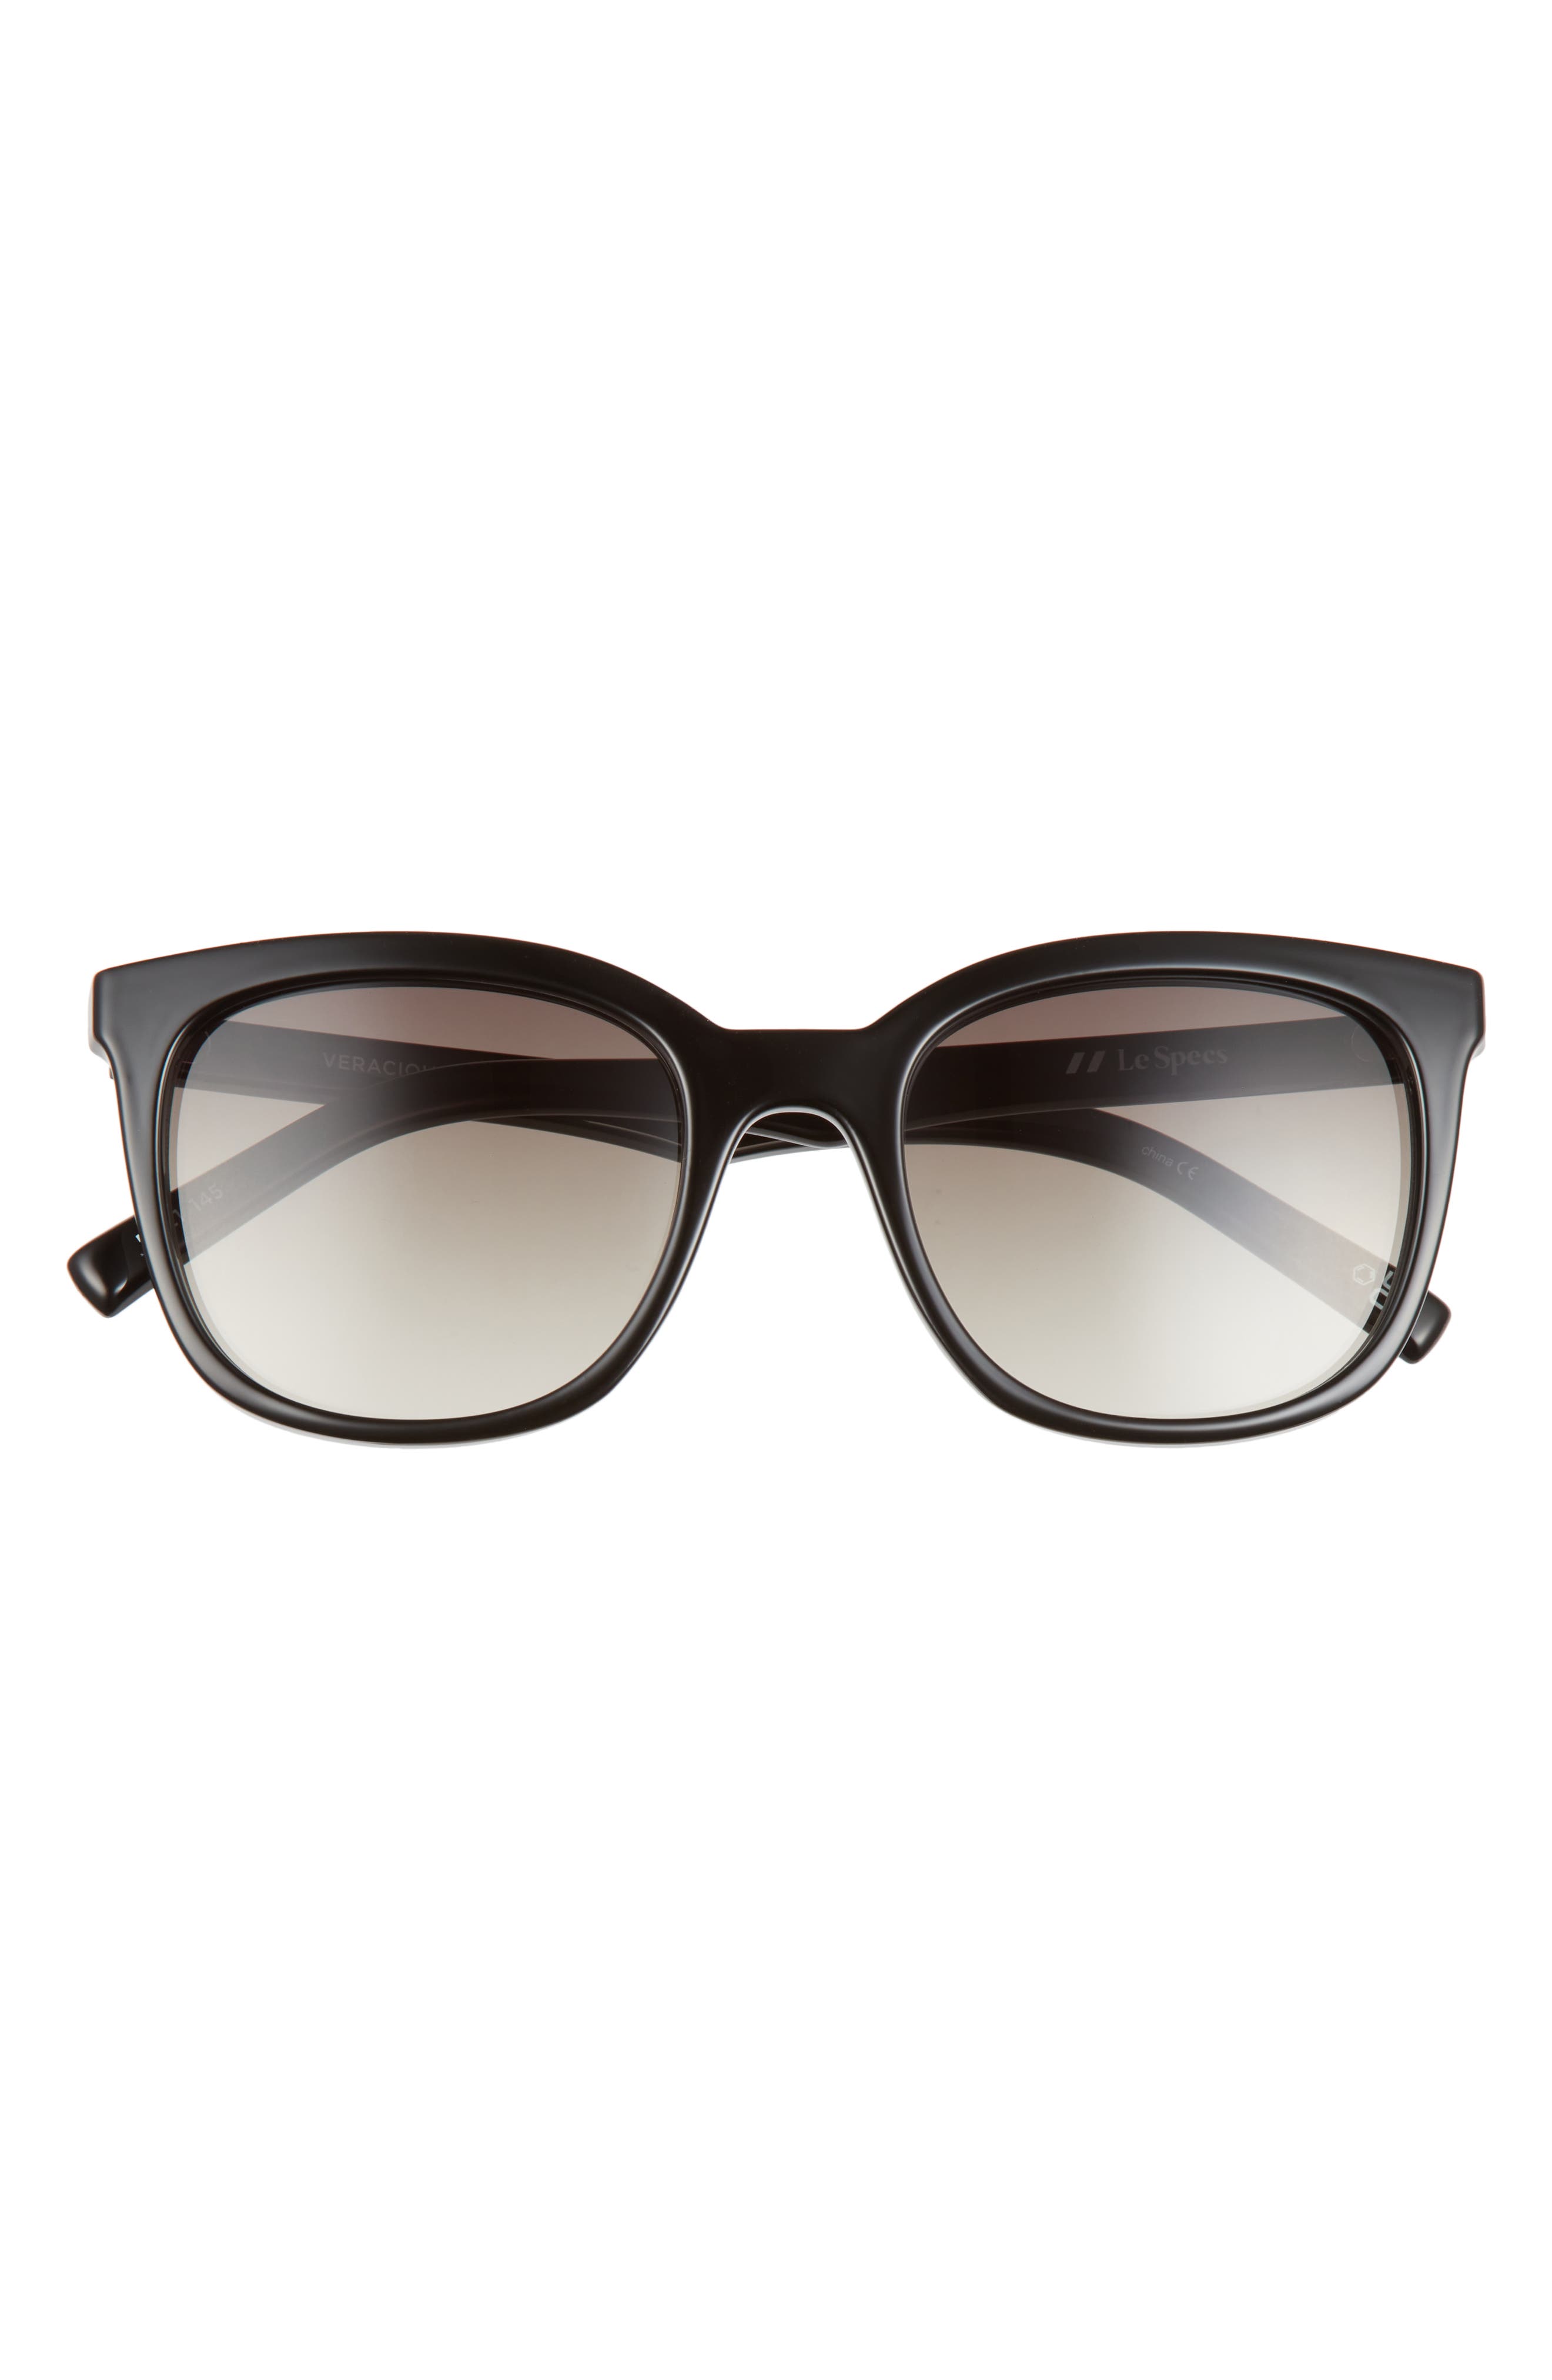 Le Specs Veracious 52mm Square Sunglasses in Black/Khaki Grad at Nordstrom